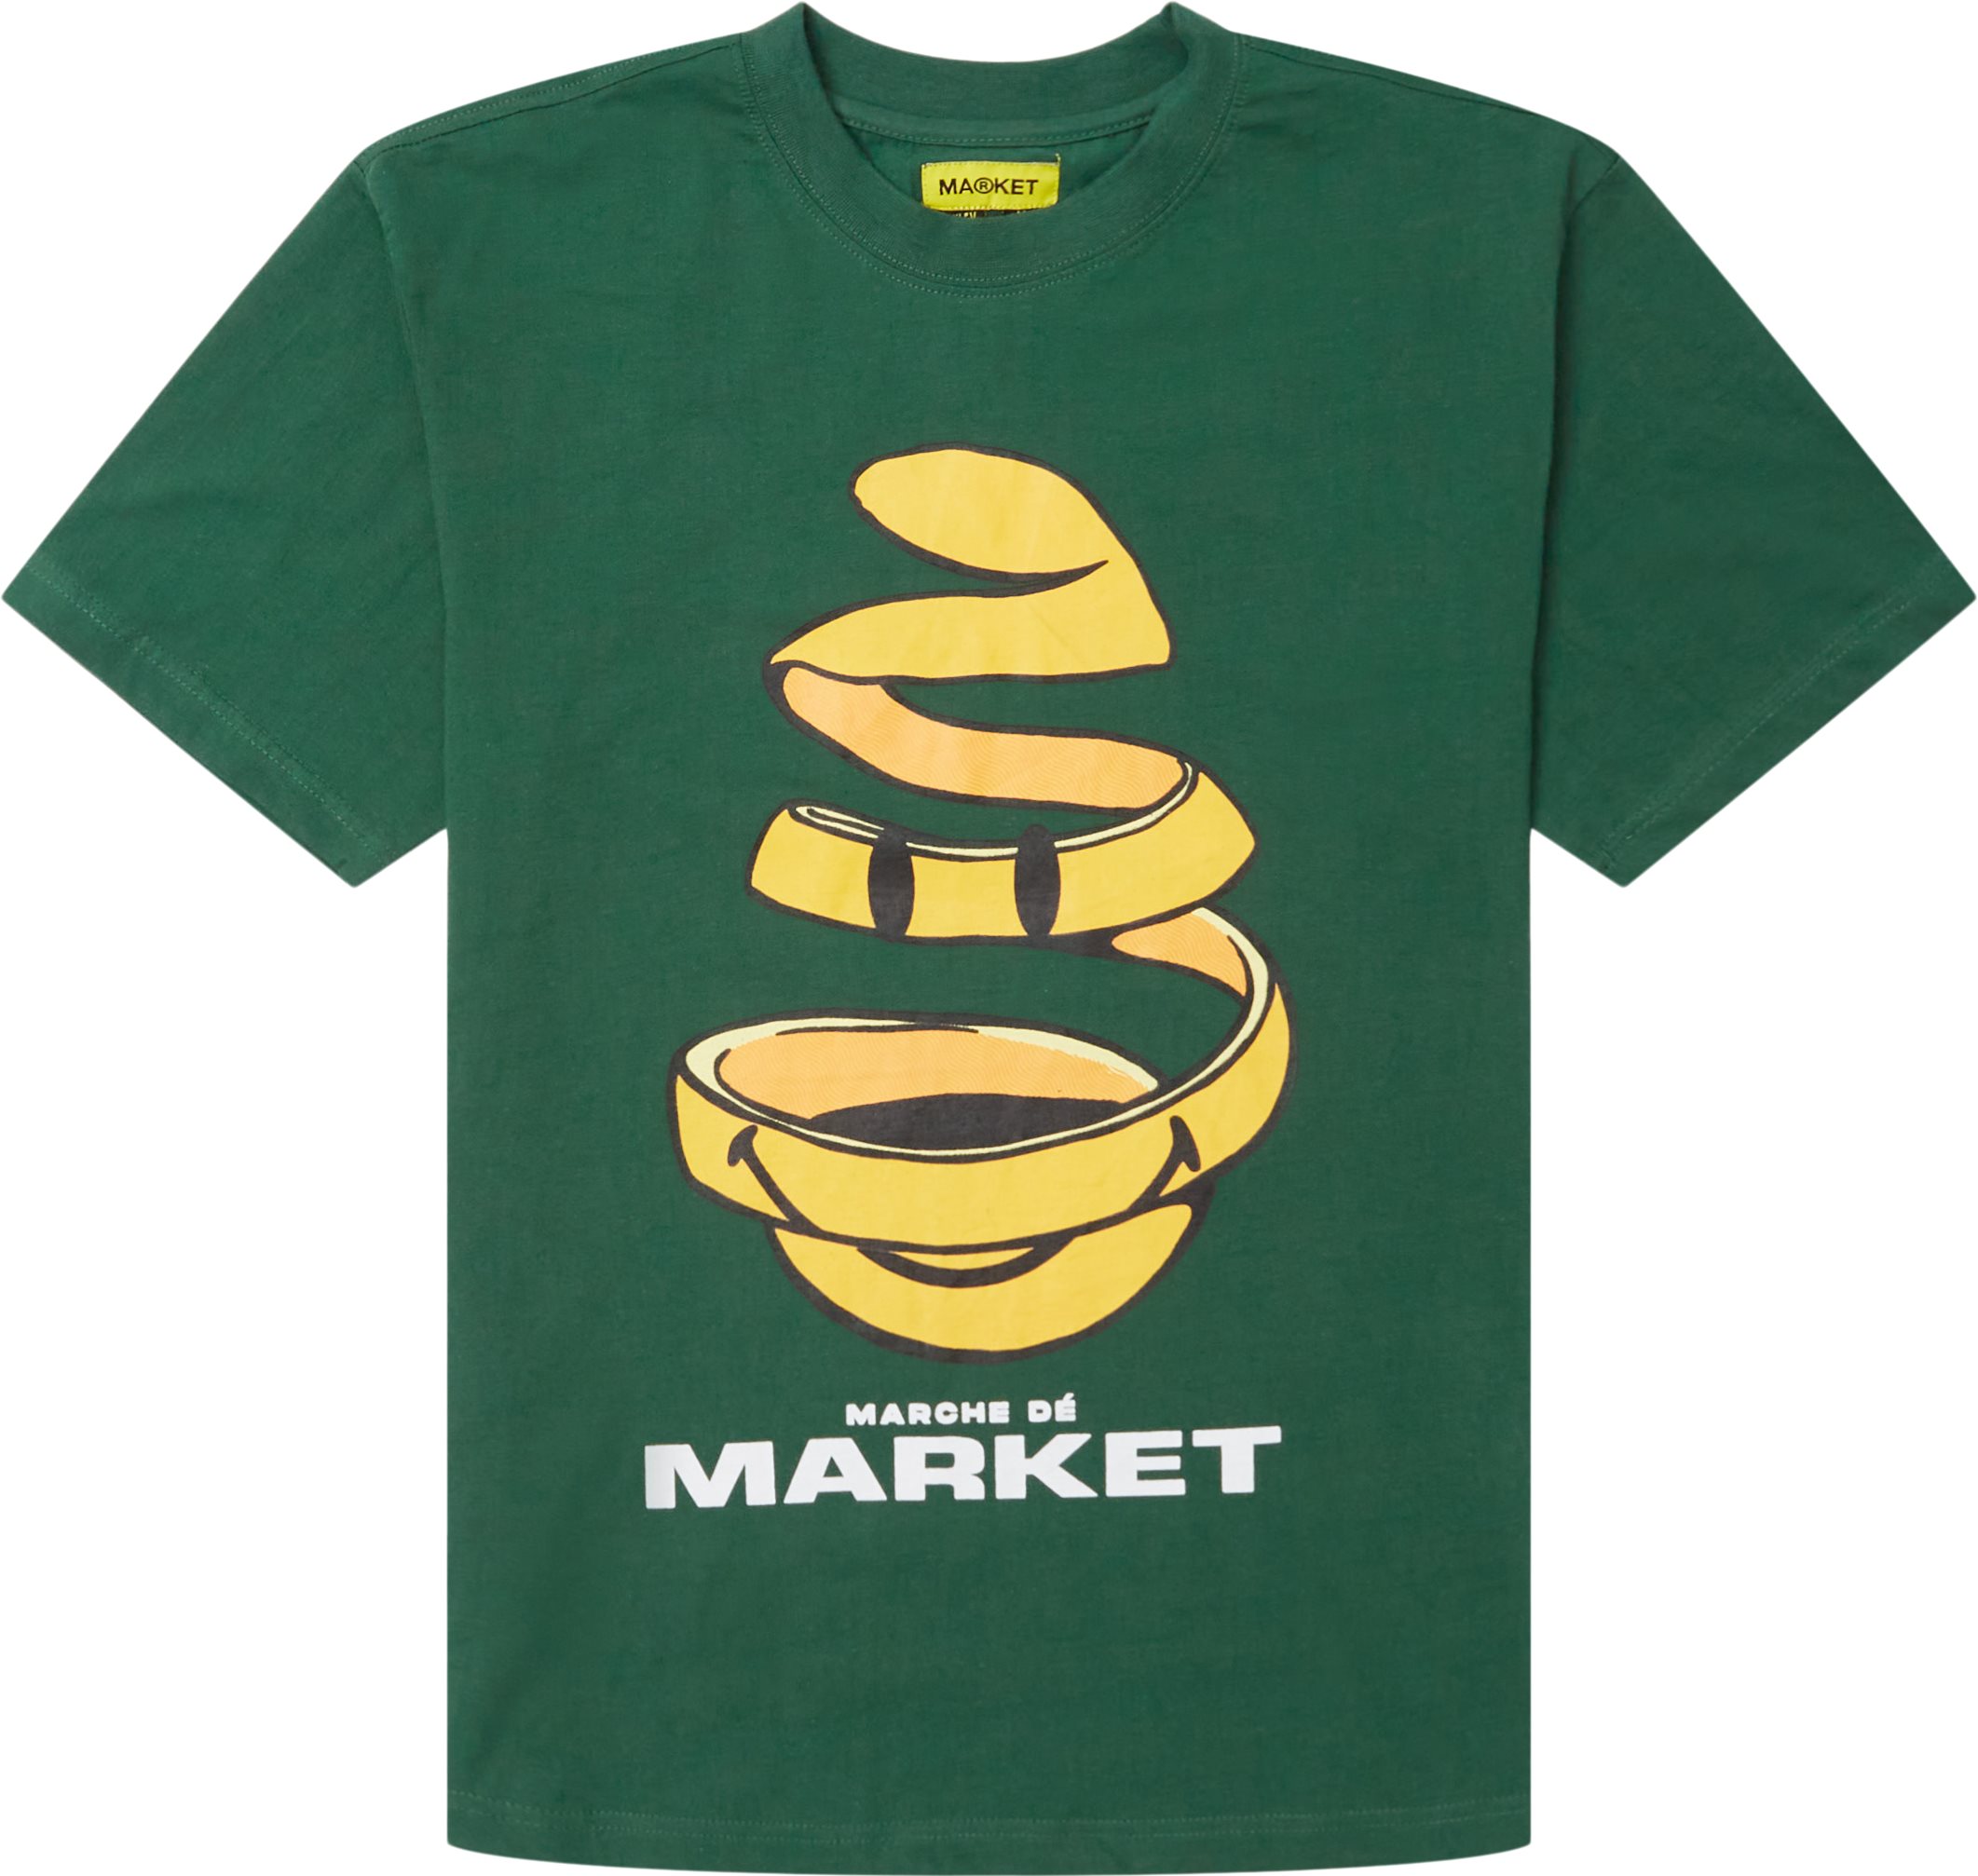 Smiley Marche De Market Tee - T-shirts - Regular fit - Green